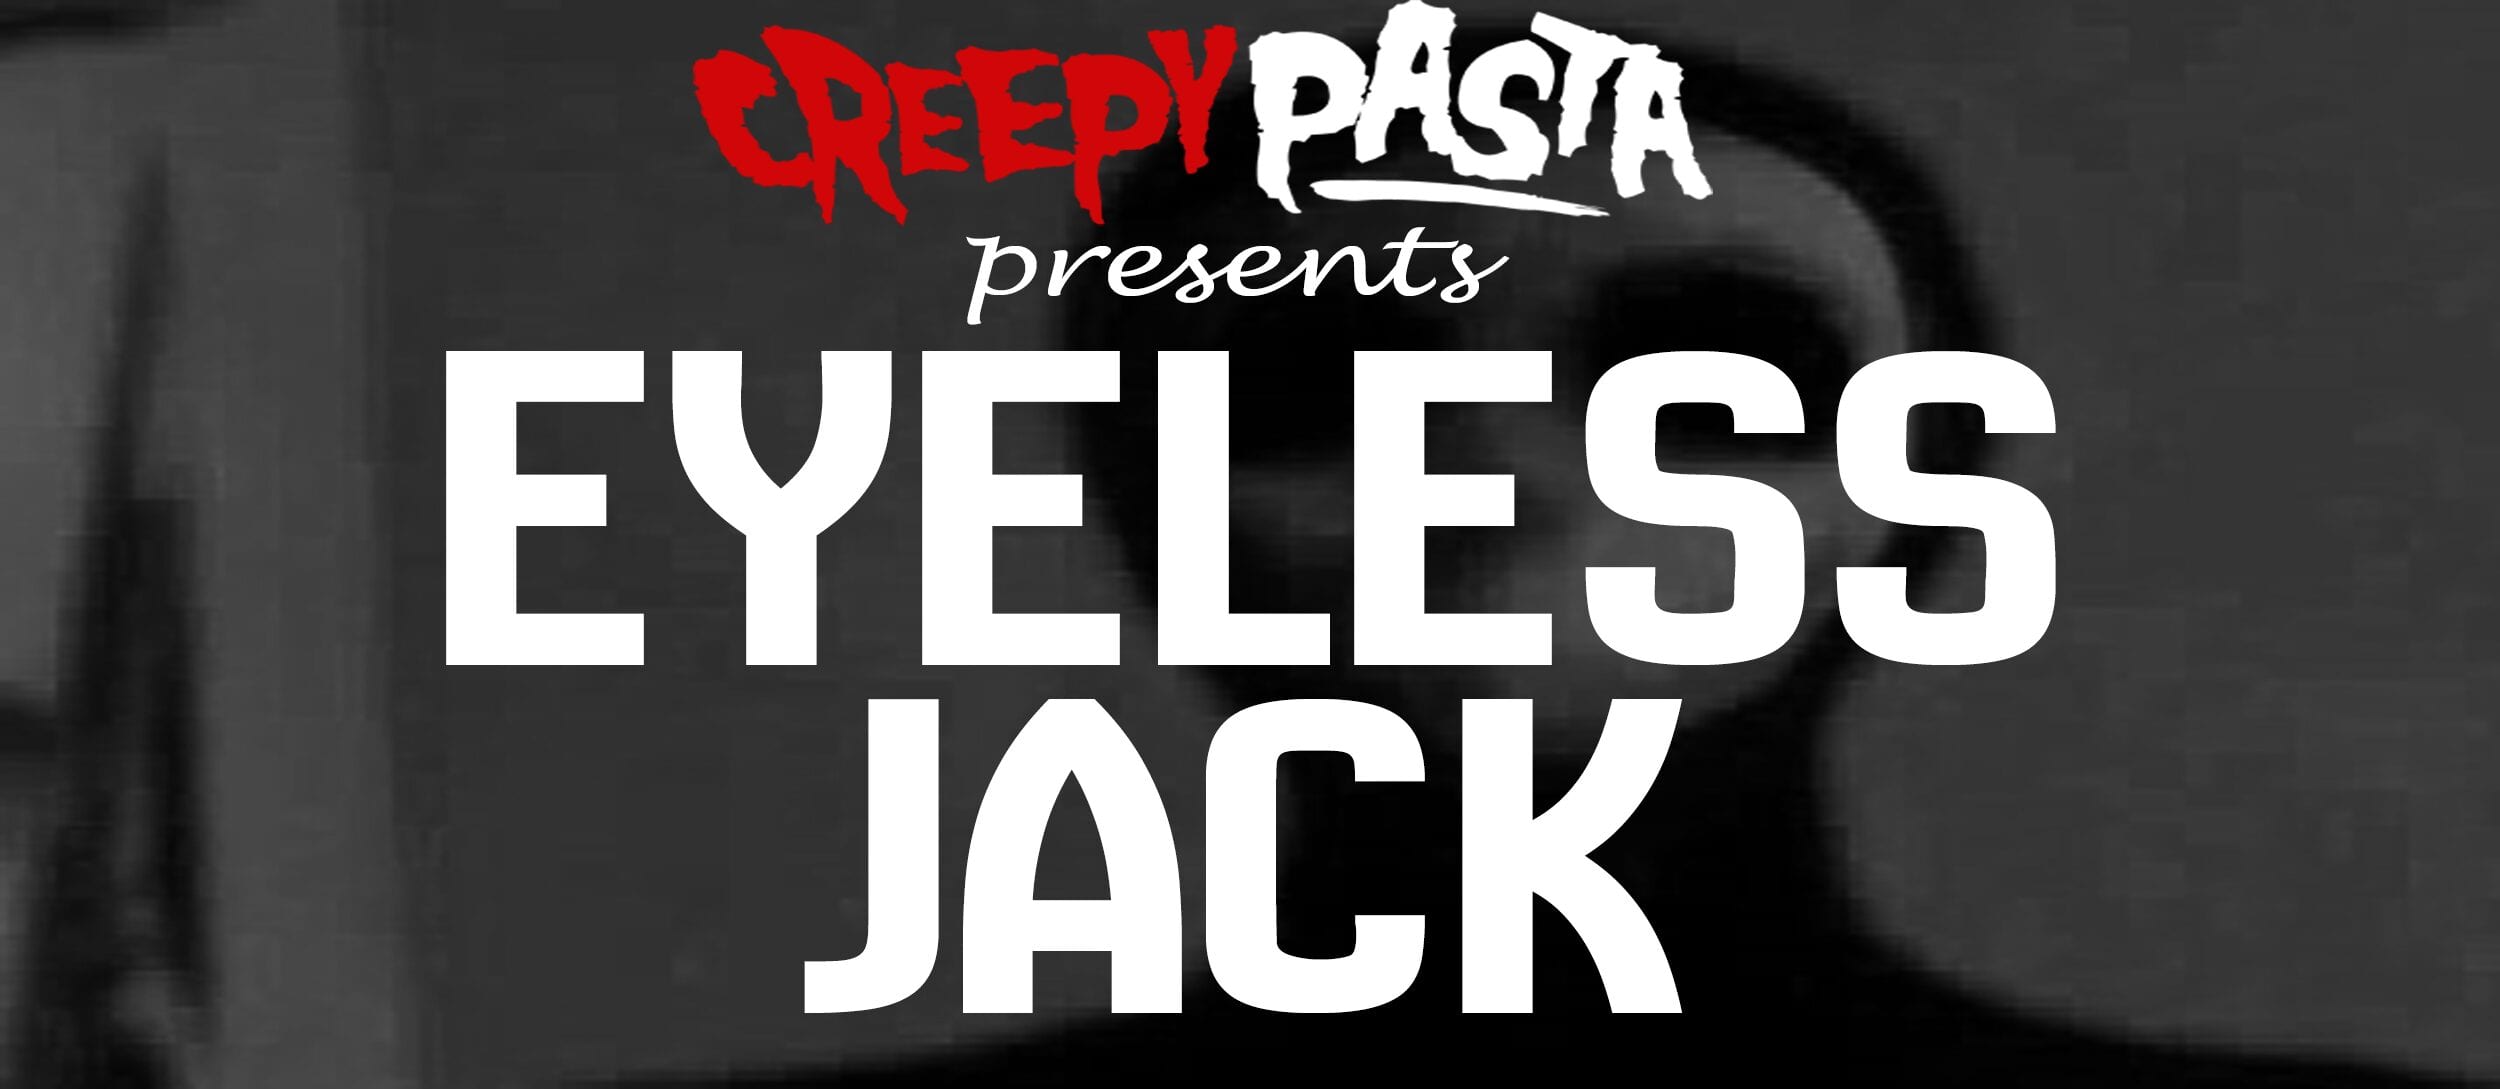 Creepy pasta OC Roleplay - Character Creation: Creepypasta Claim